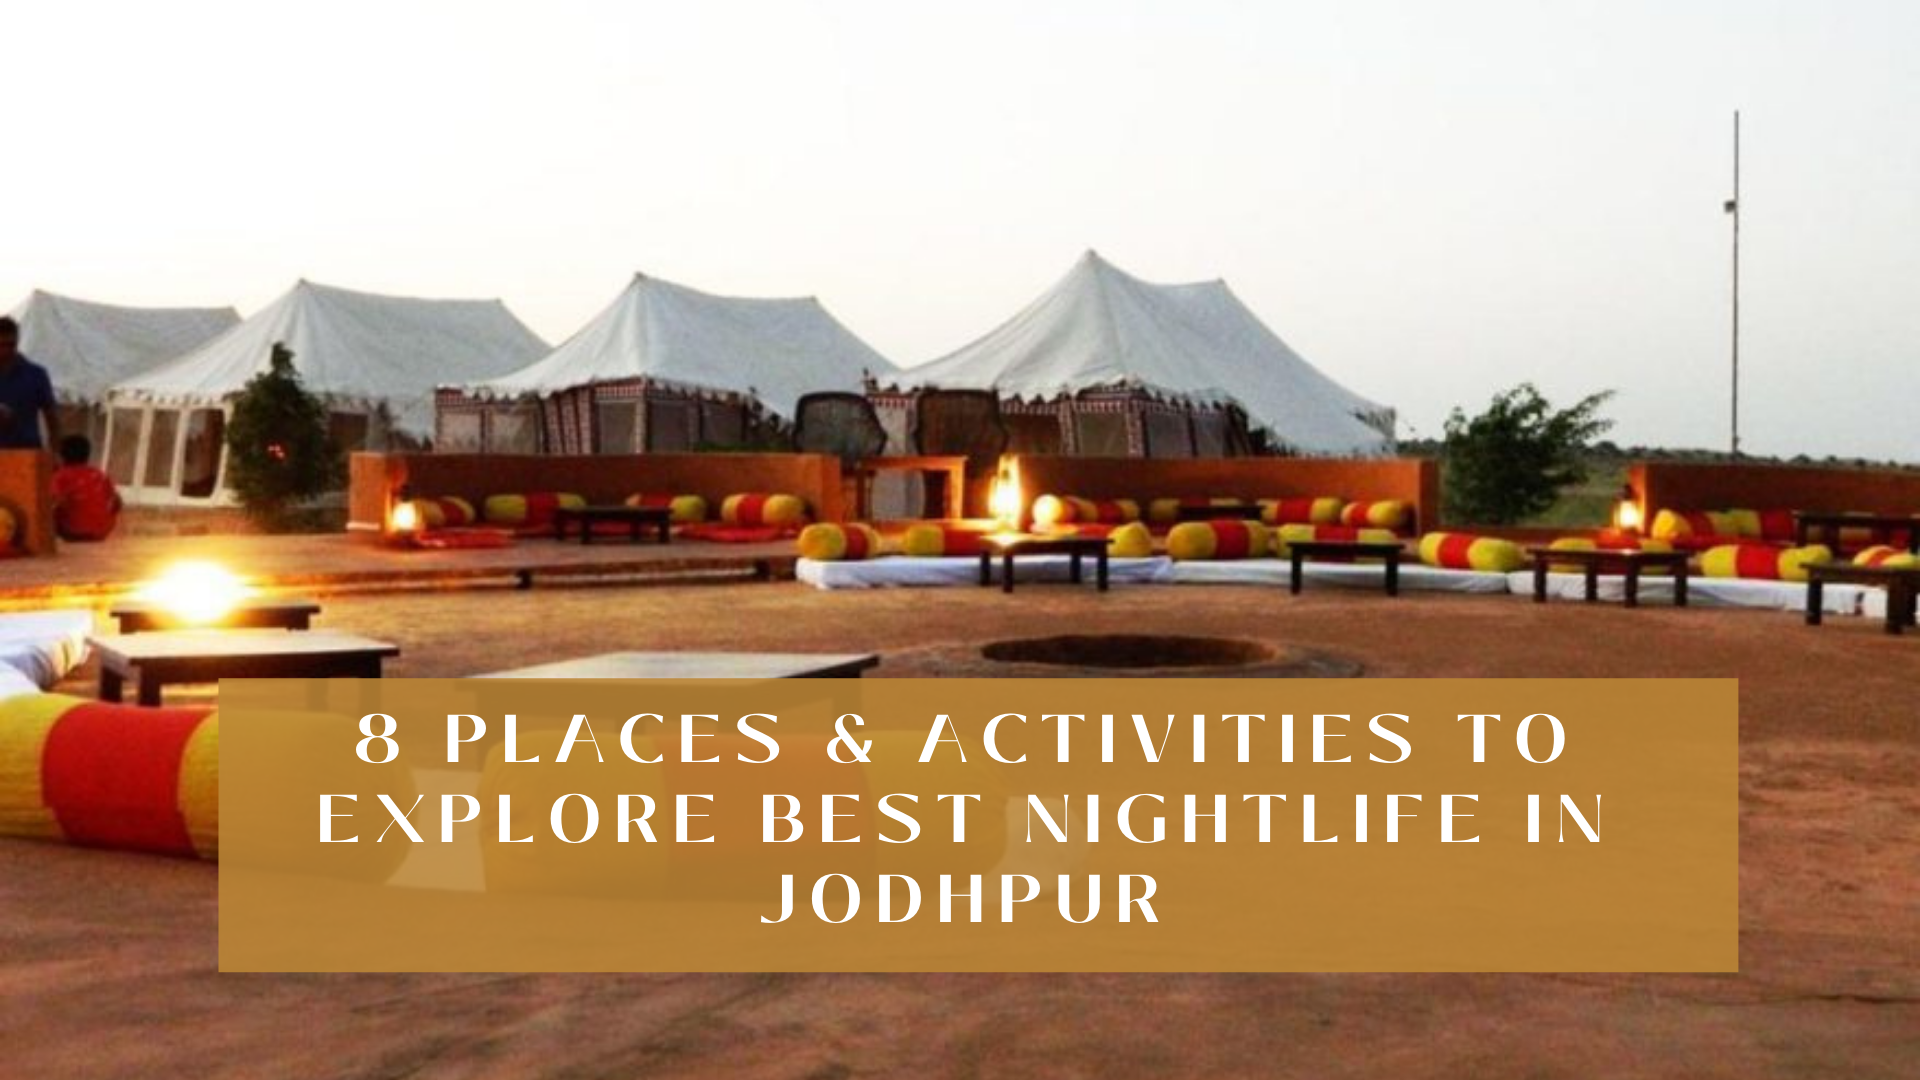 8 Places & Activities to Explore Best Nightlife in Jodhpur